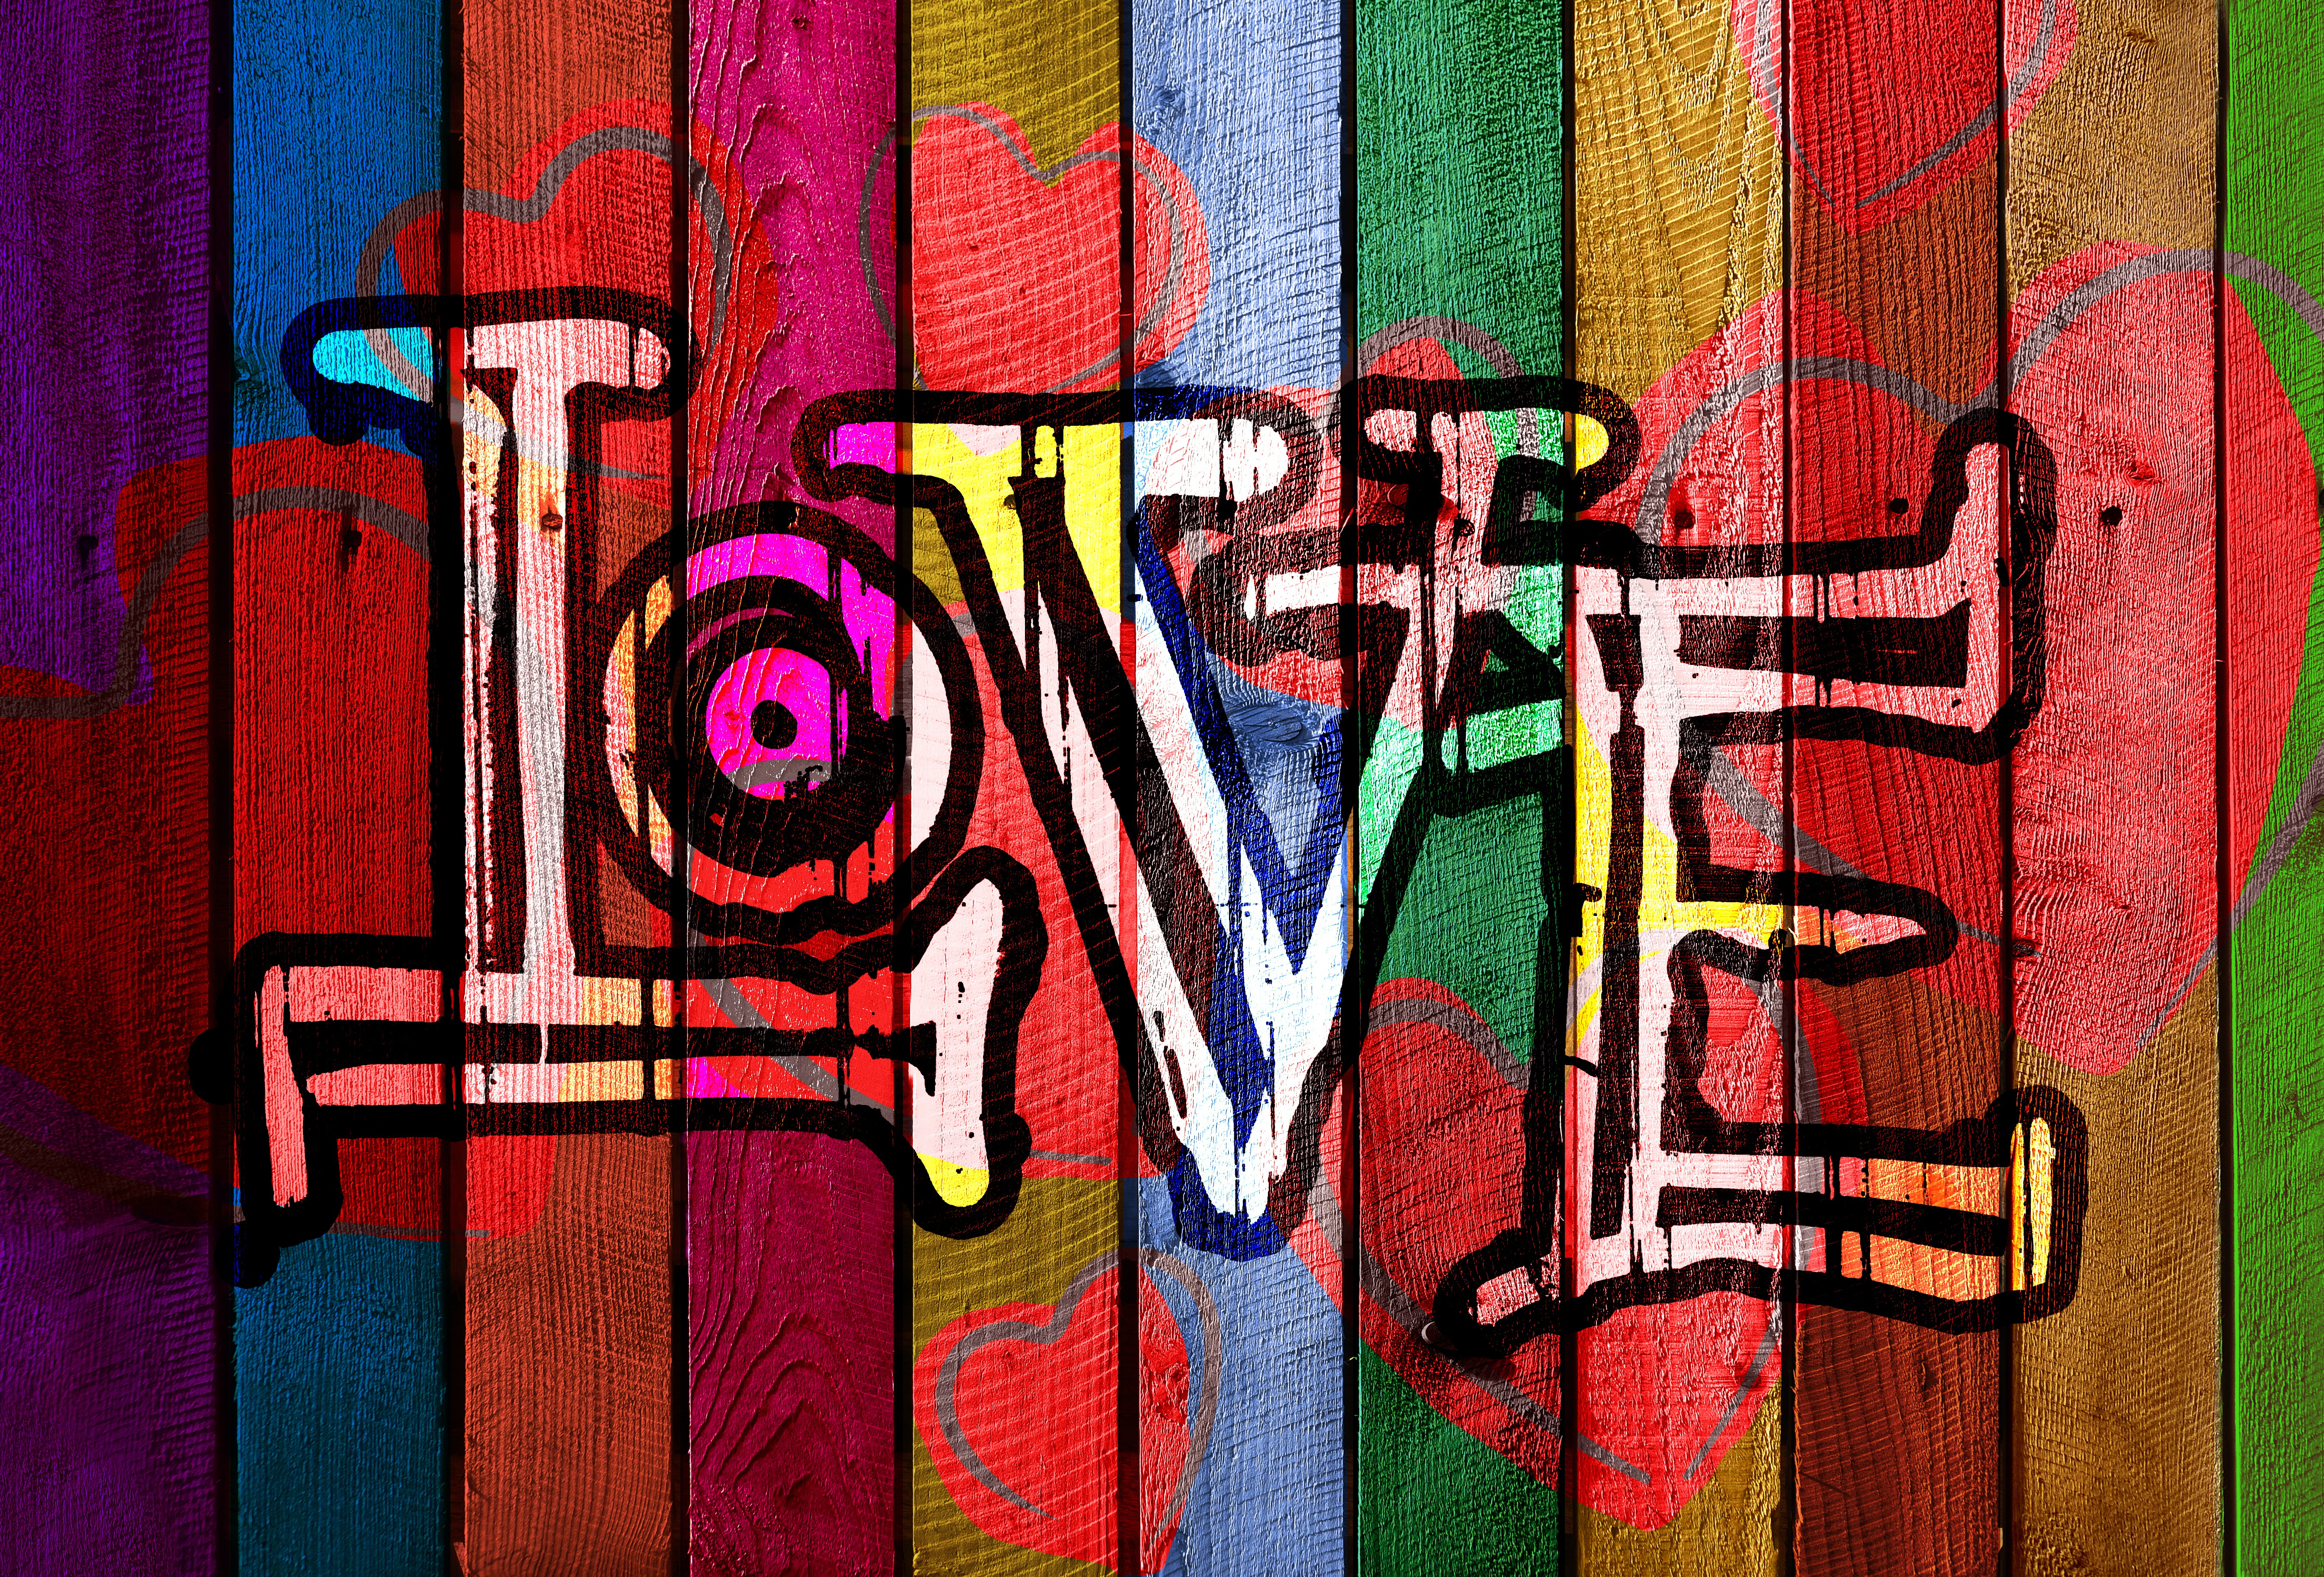 Bilder englischer Herz Liebe text Graffiti Bretter 5376x3648 Englisch englische englisches Wort